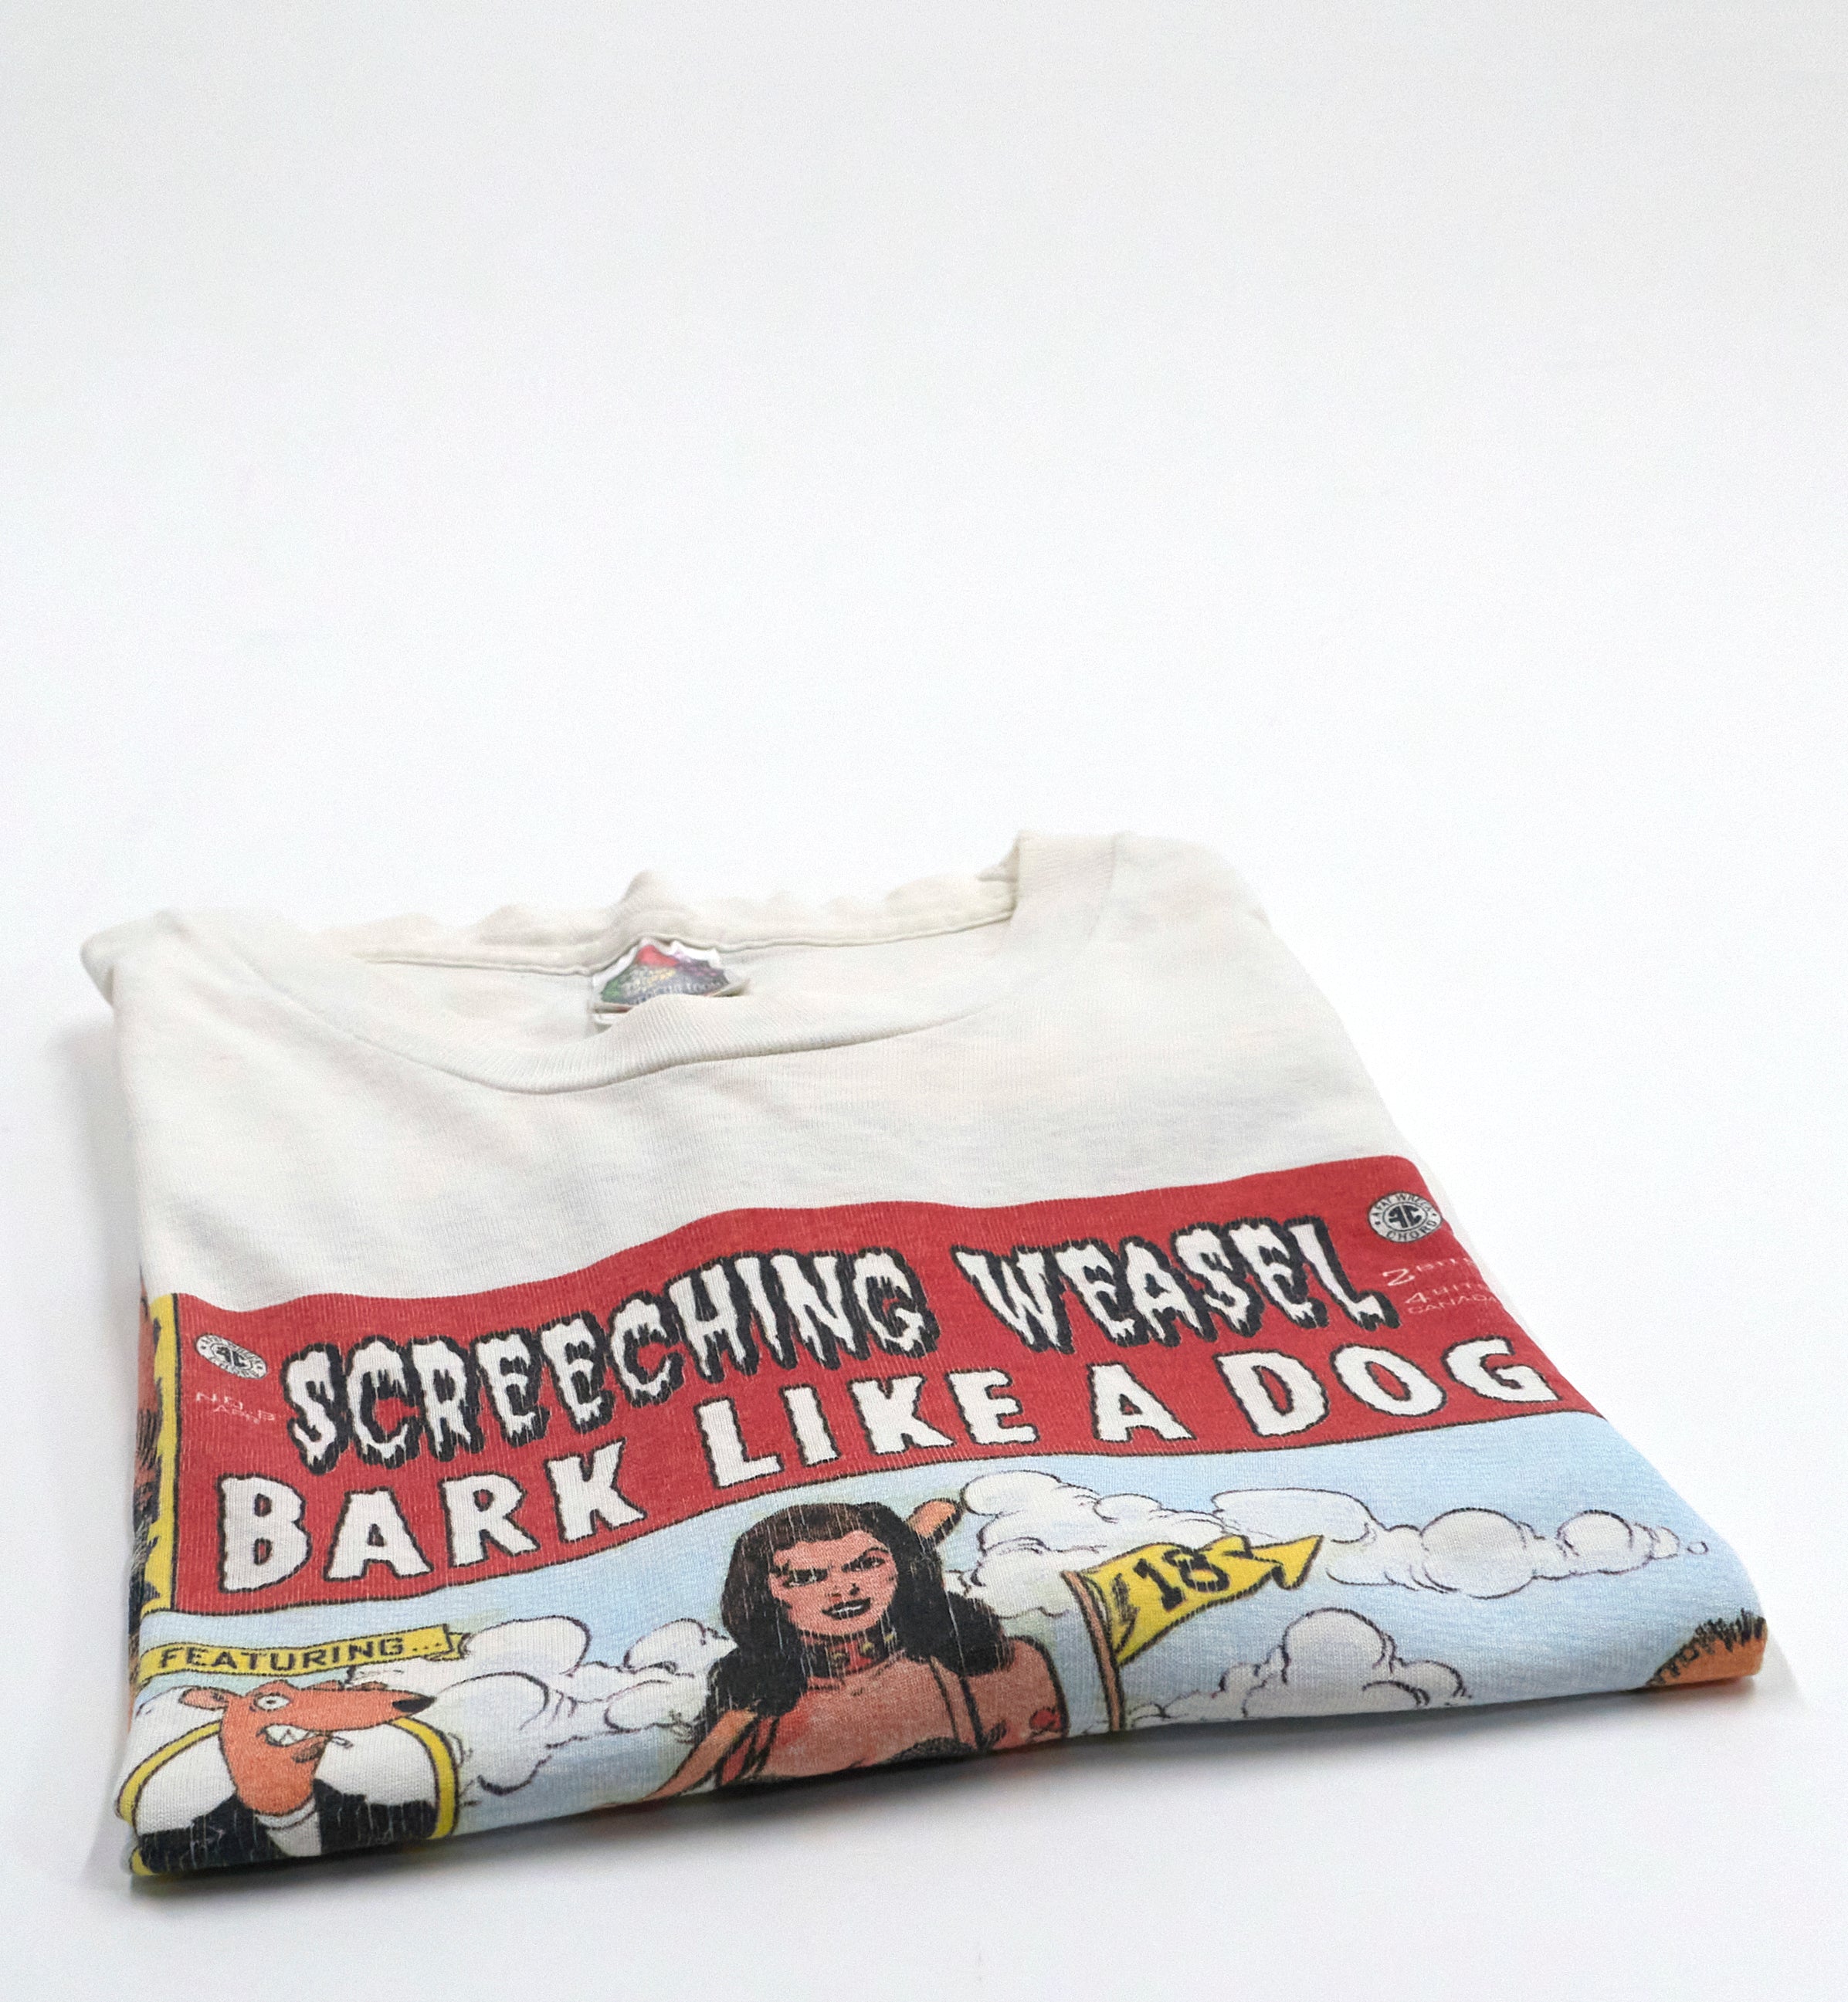 Screeching Weasel – Bark Like A Dog 1996 Tour Shirt Size Large